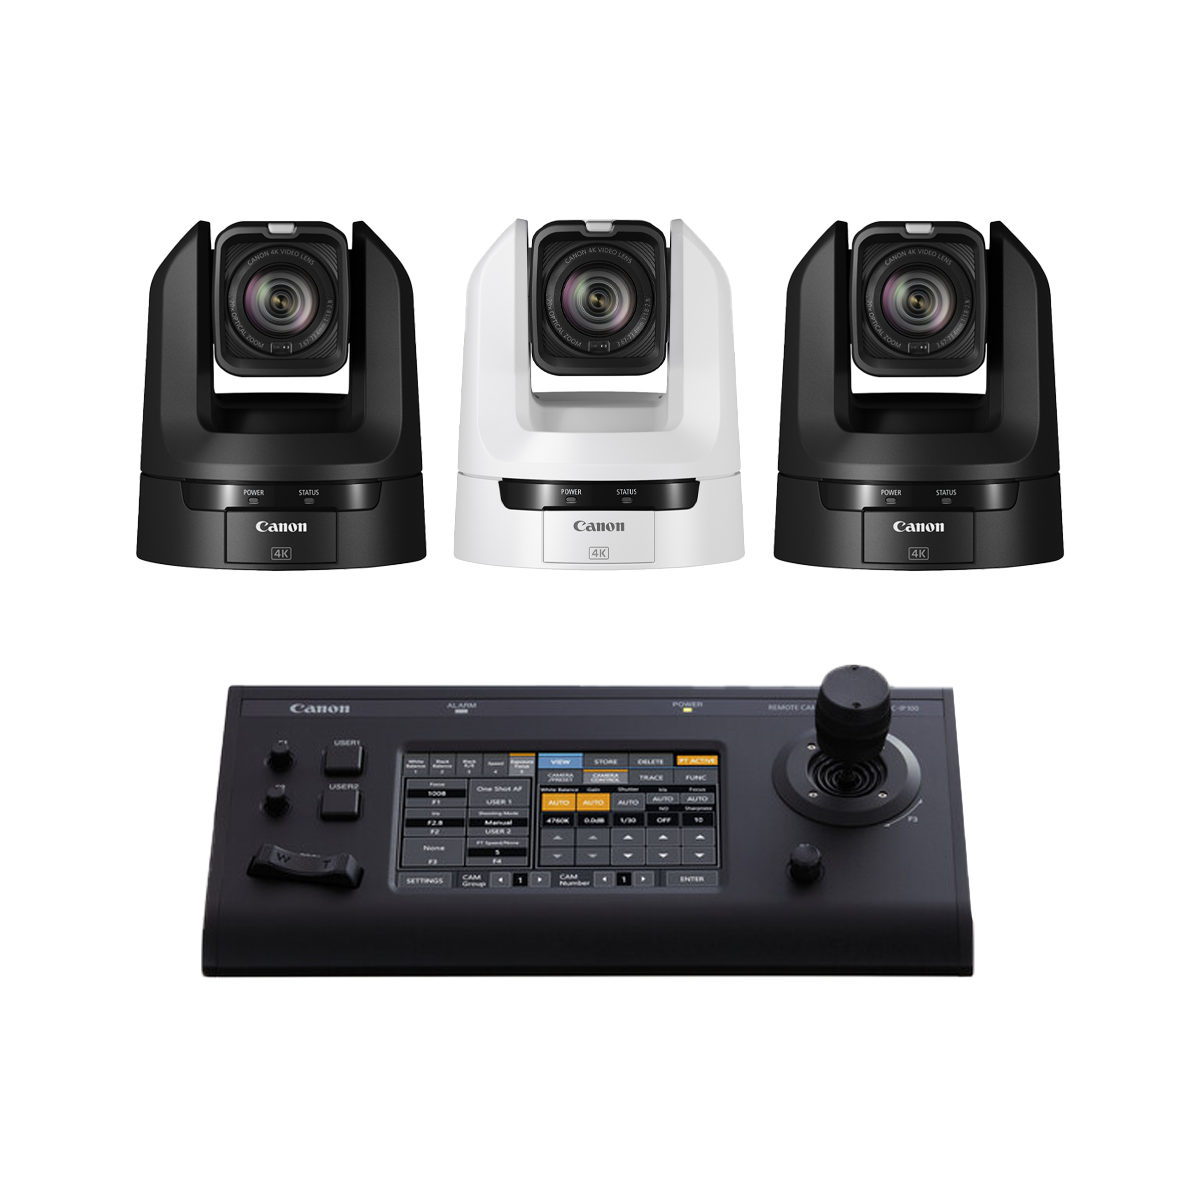 CR-N100 PTZ Cameras (2 X Black + 1 X White) + 1 X RC-IP100 Controller Bundle